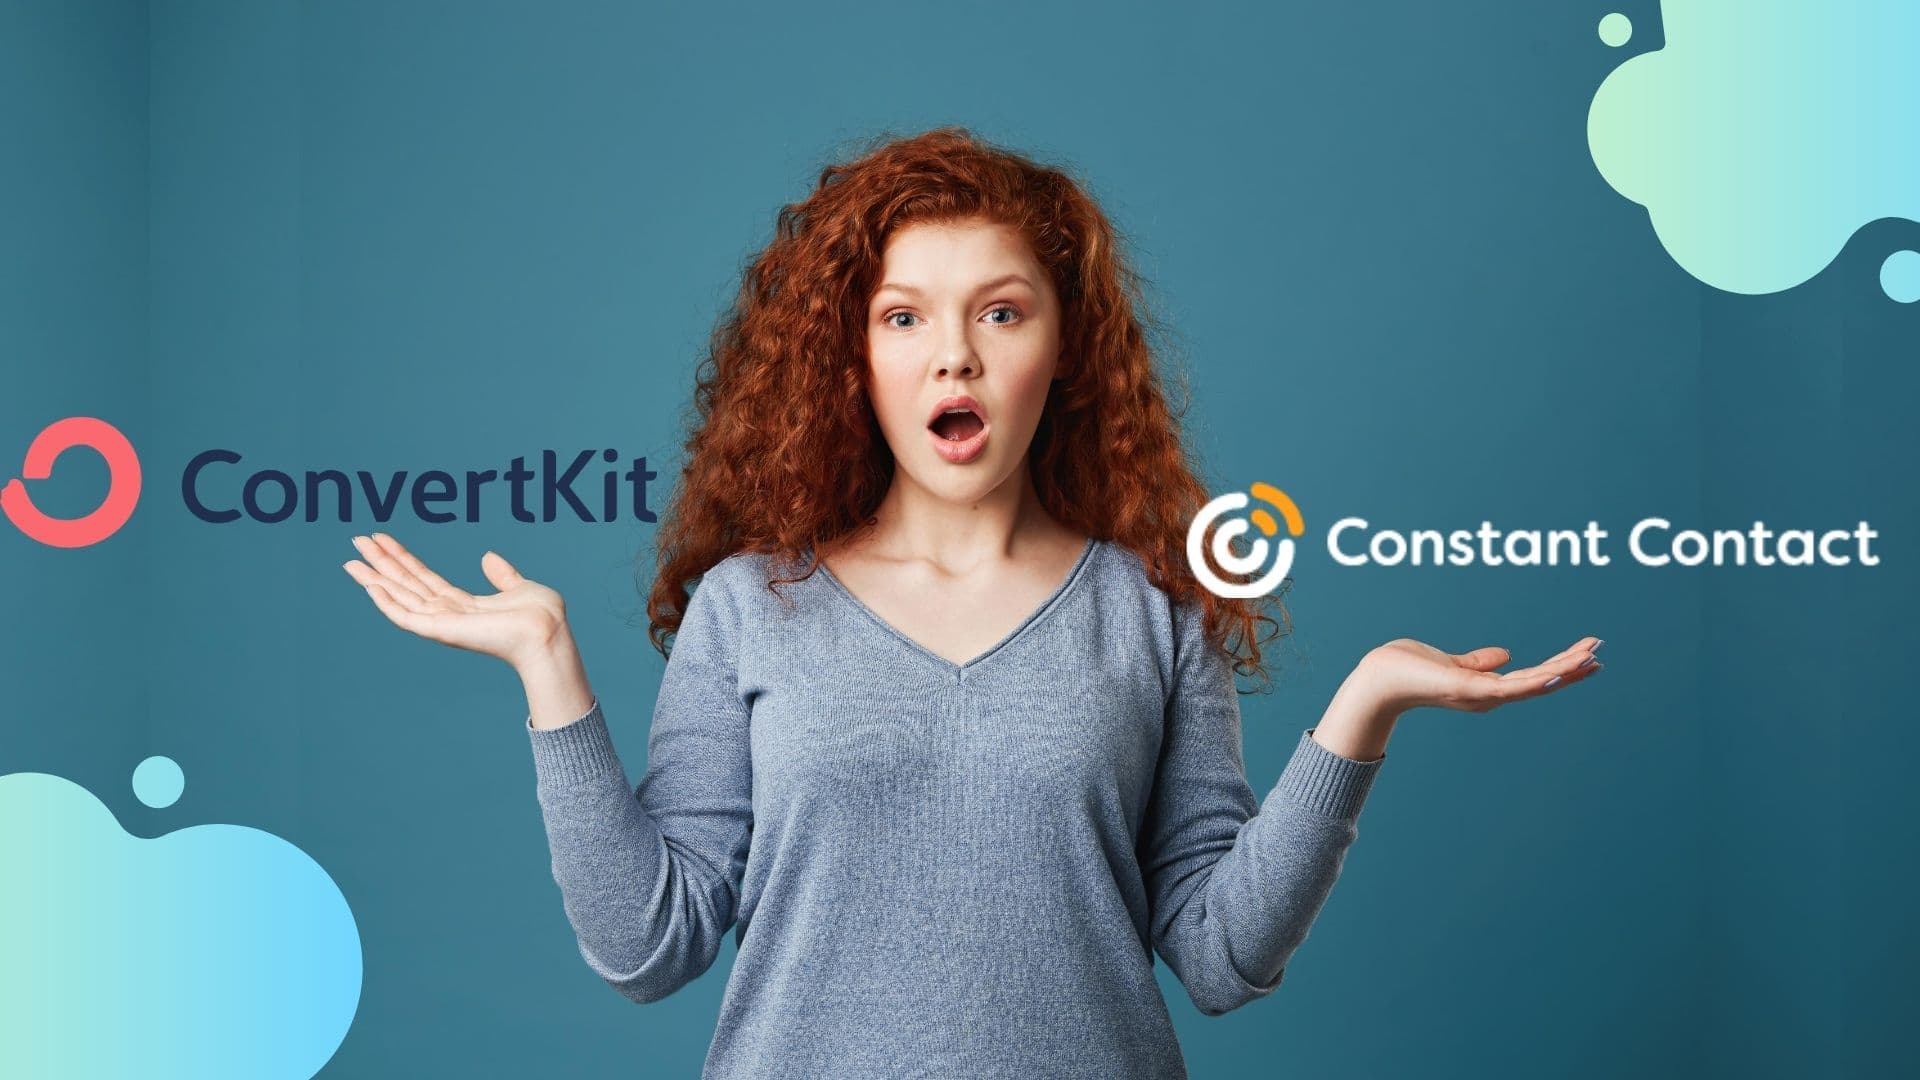 ConvertKit vs Constant Contact